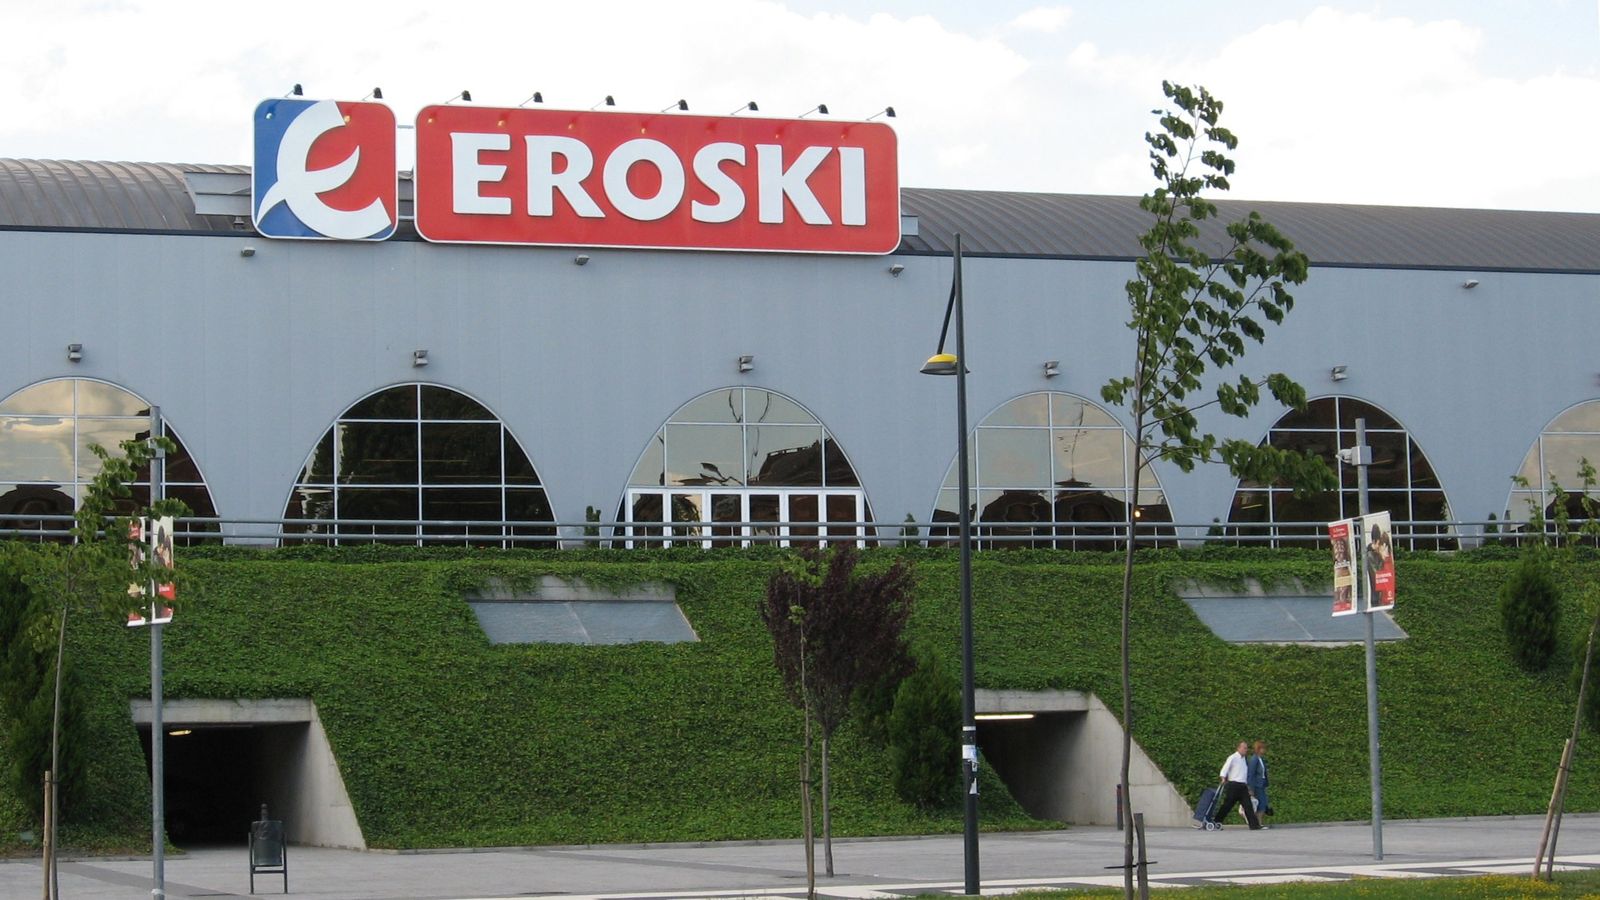 Foto: Centro Comercial Eroski en Vitoria. (Yrithinnd, Wikimedia)